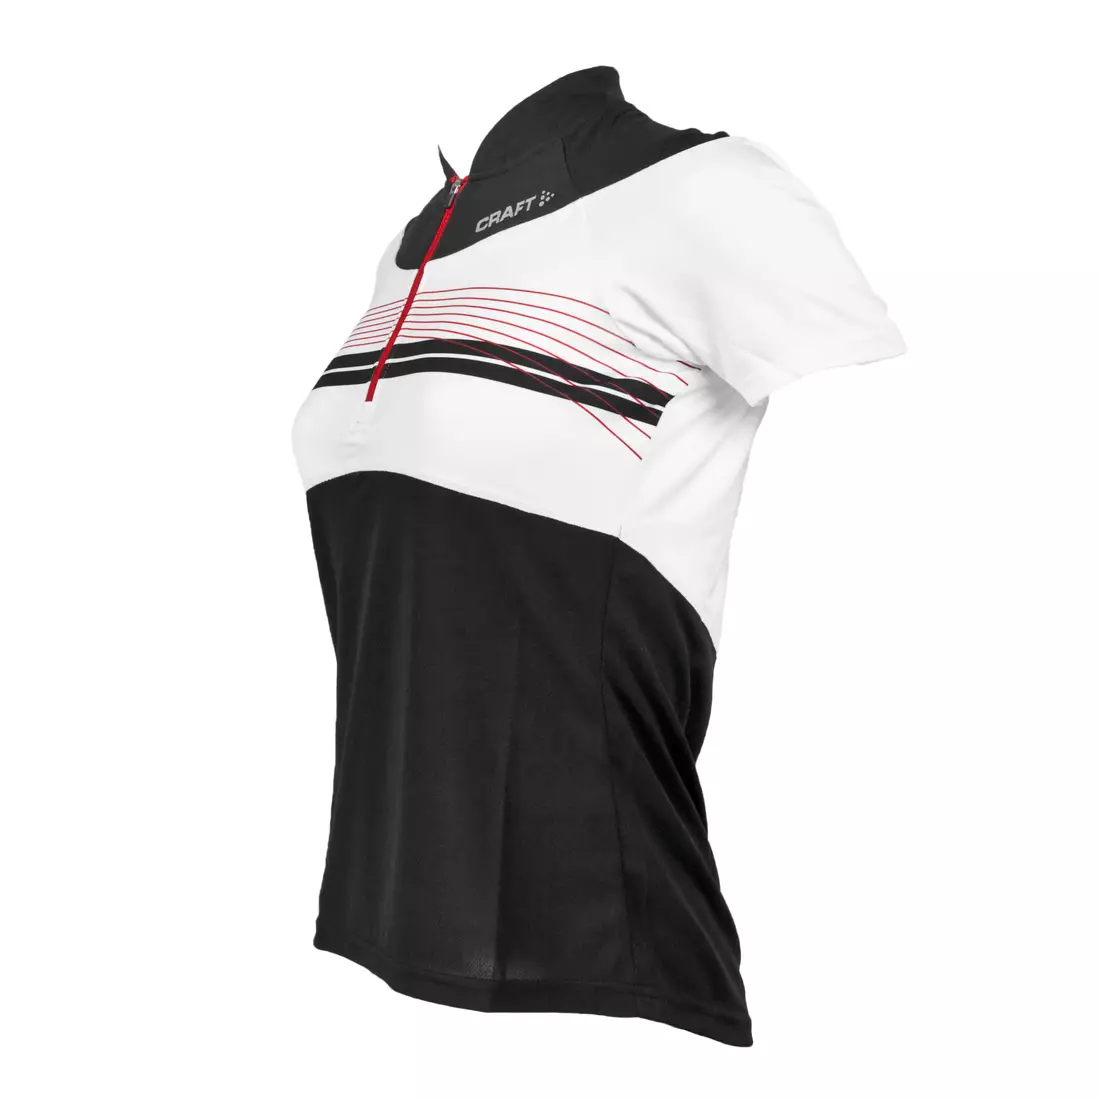 CRAFT ACTIVE BIKE - dámský cyklistický dres 1901942-9900, barva: bílá a černá